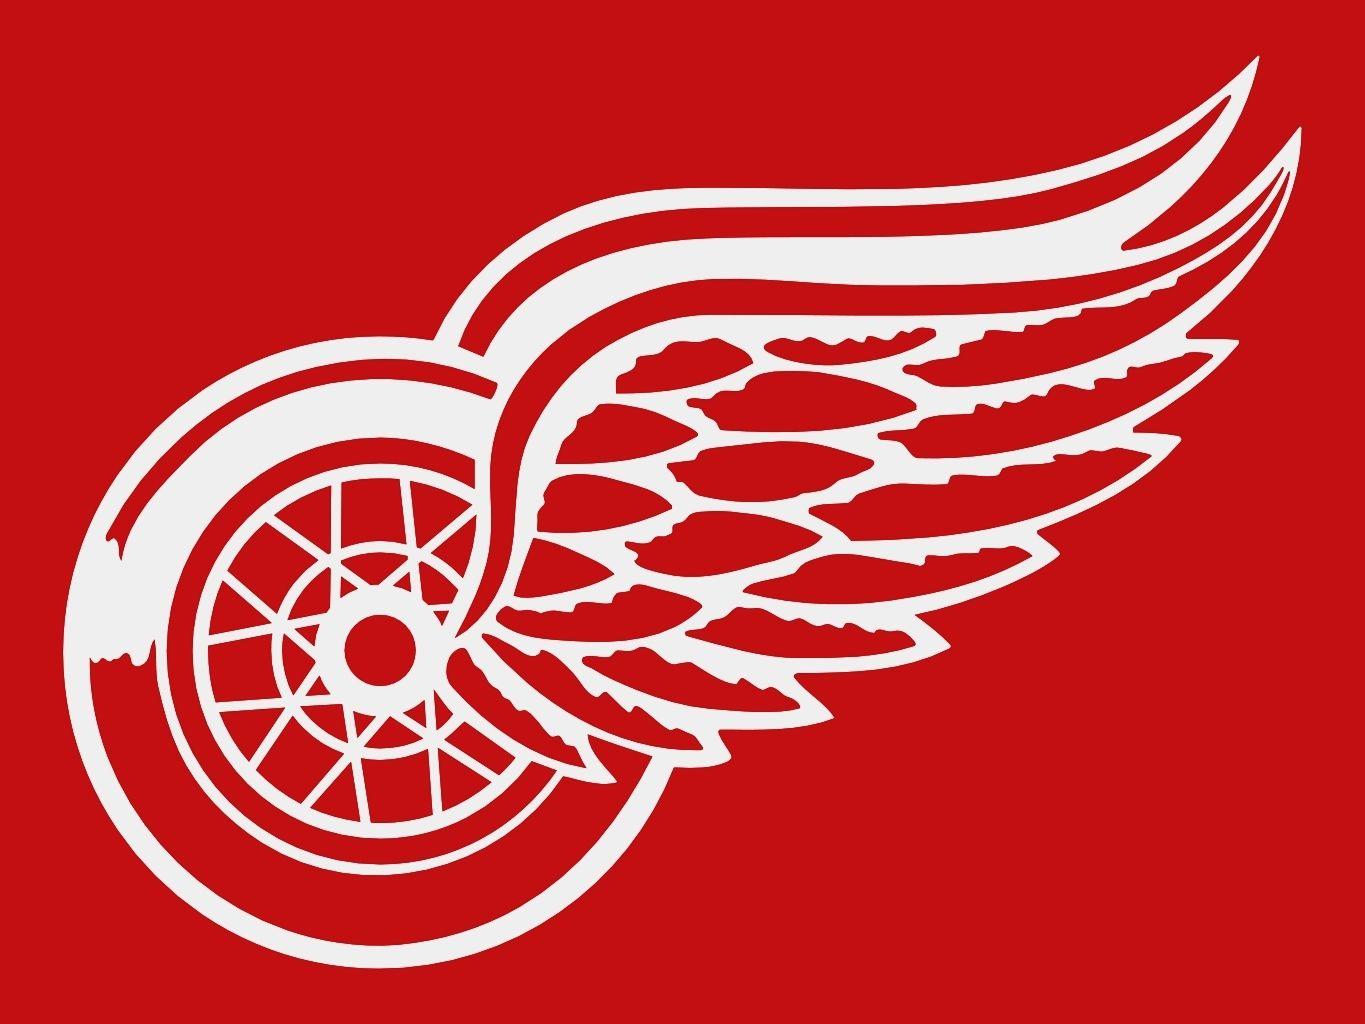 Detroit Red Wing Sports Logo - Detroit Red Wings | Pro Sports Teams Wiki | FANDOM powered by Wikia